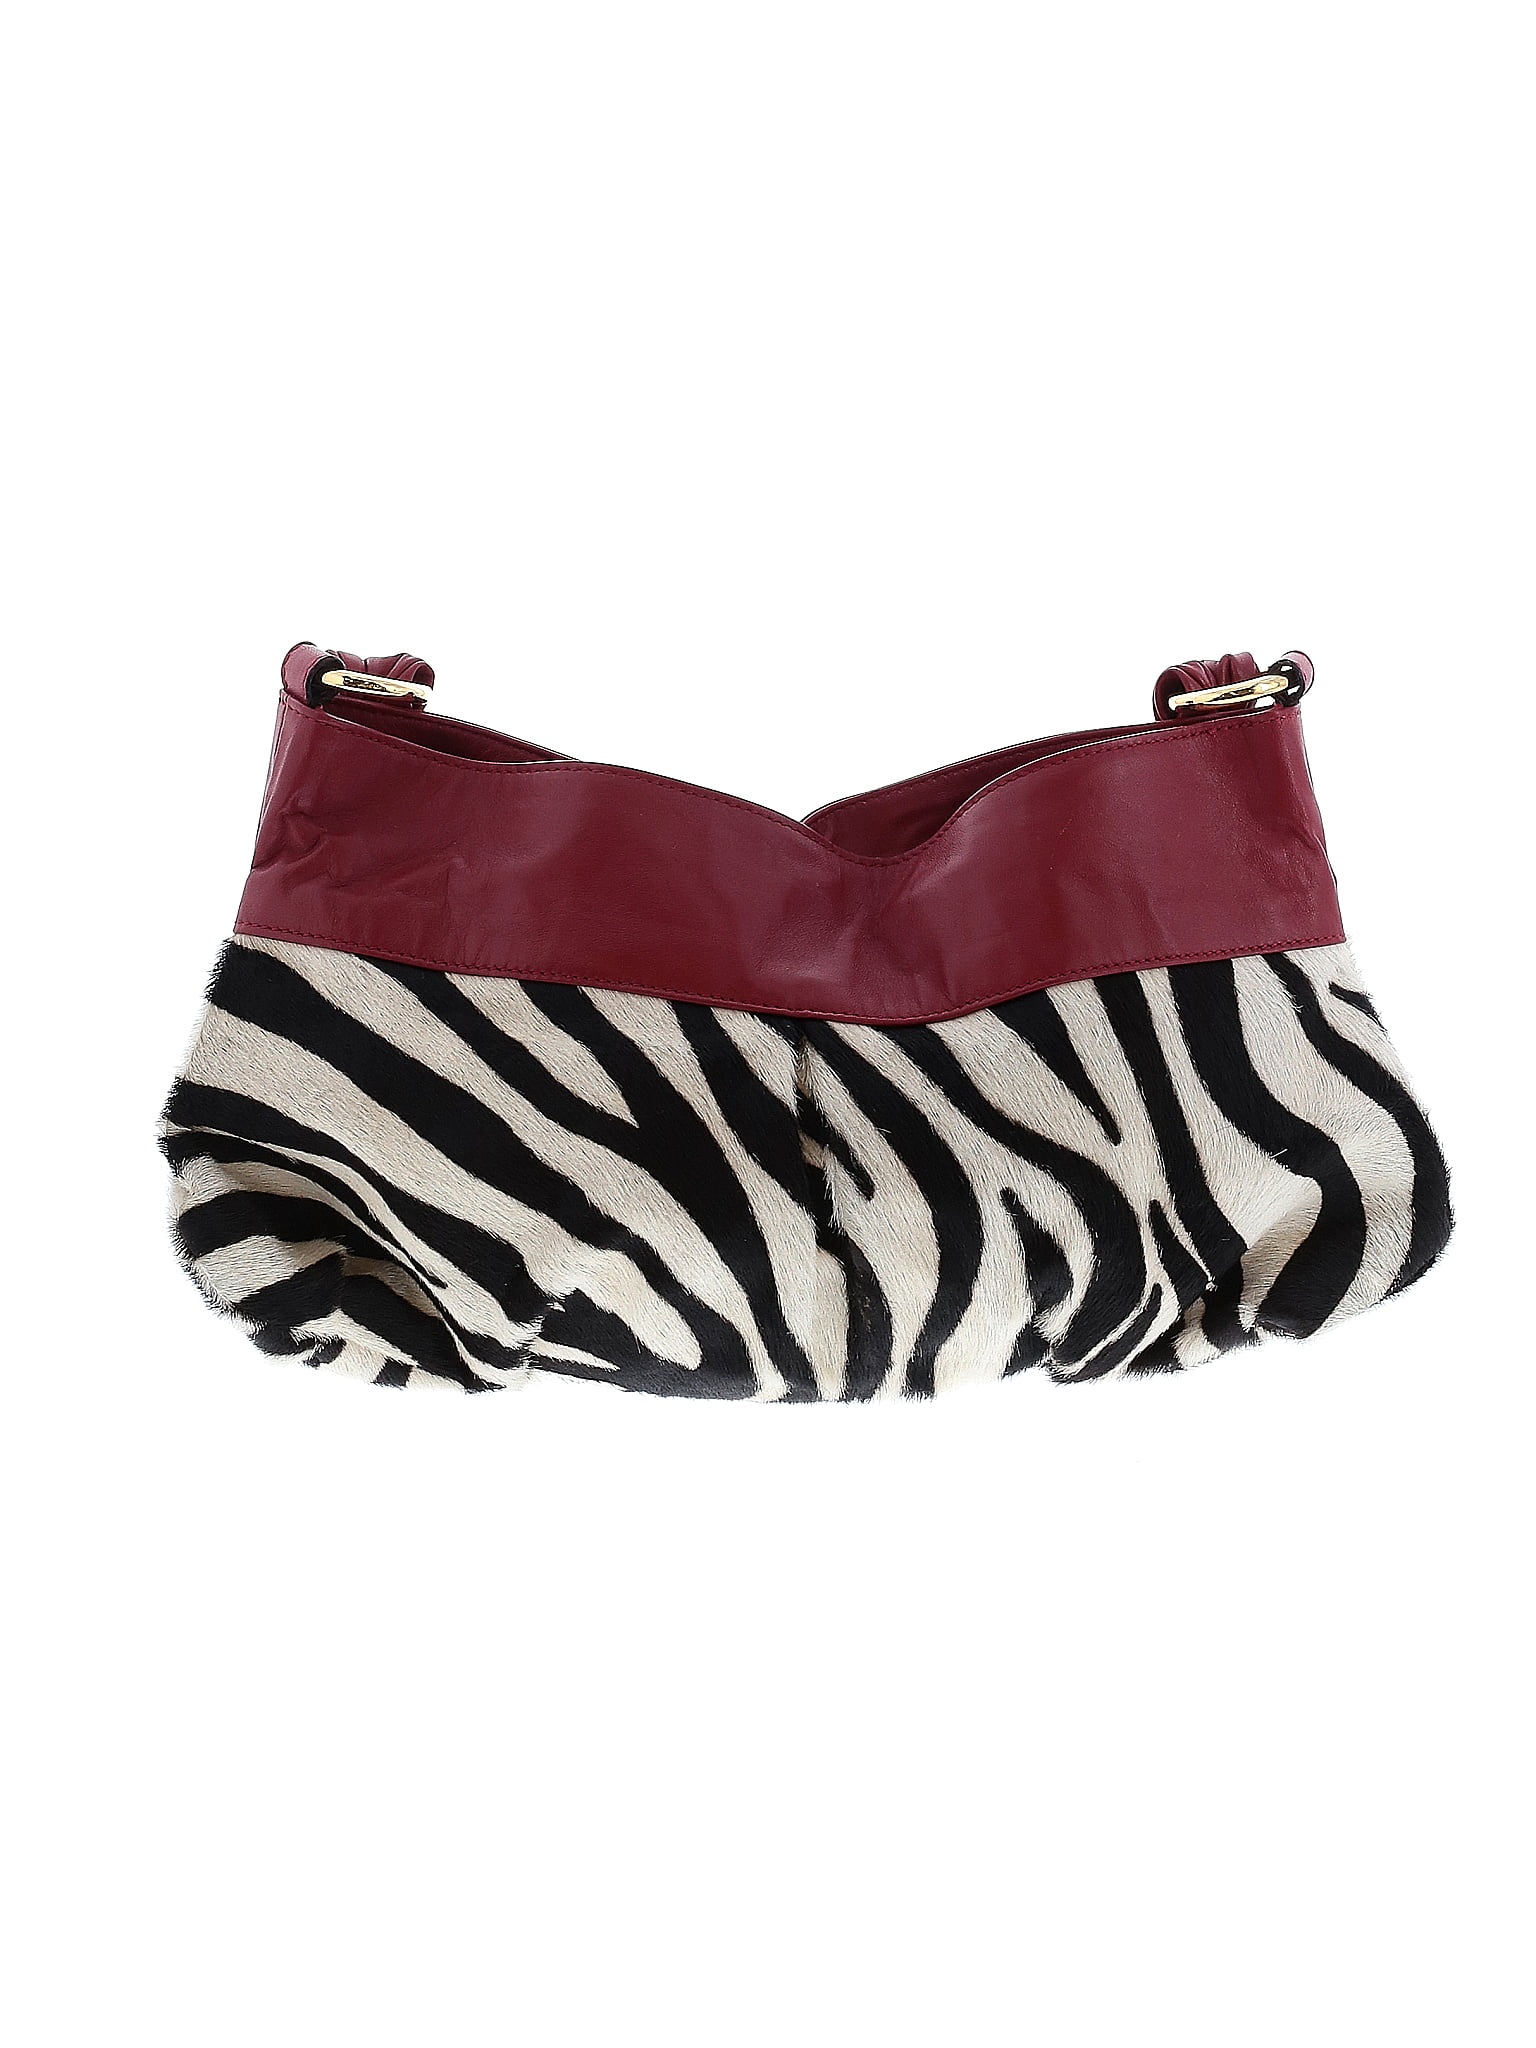 Purse Real Leather Italian Zebra Red Shoulder Bag Purse Paolo Masi